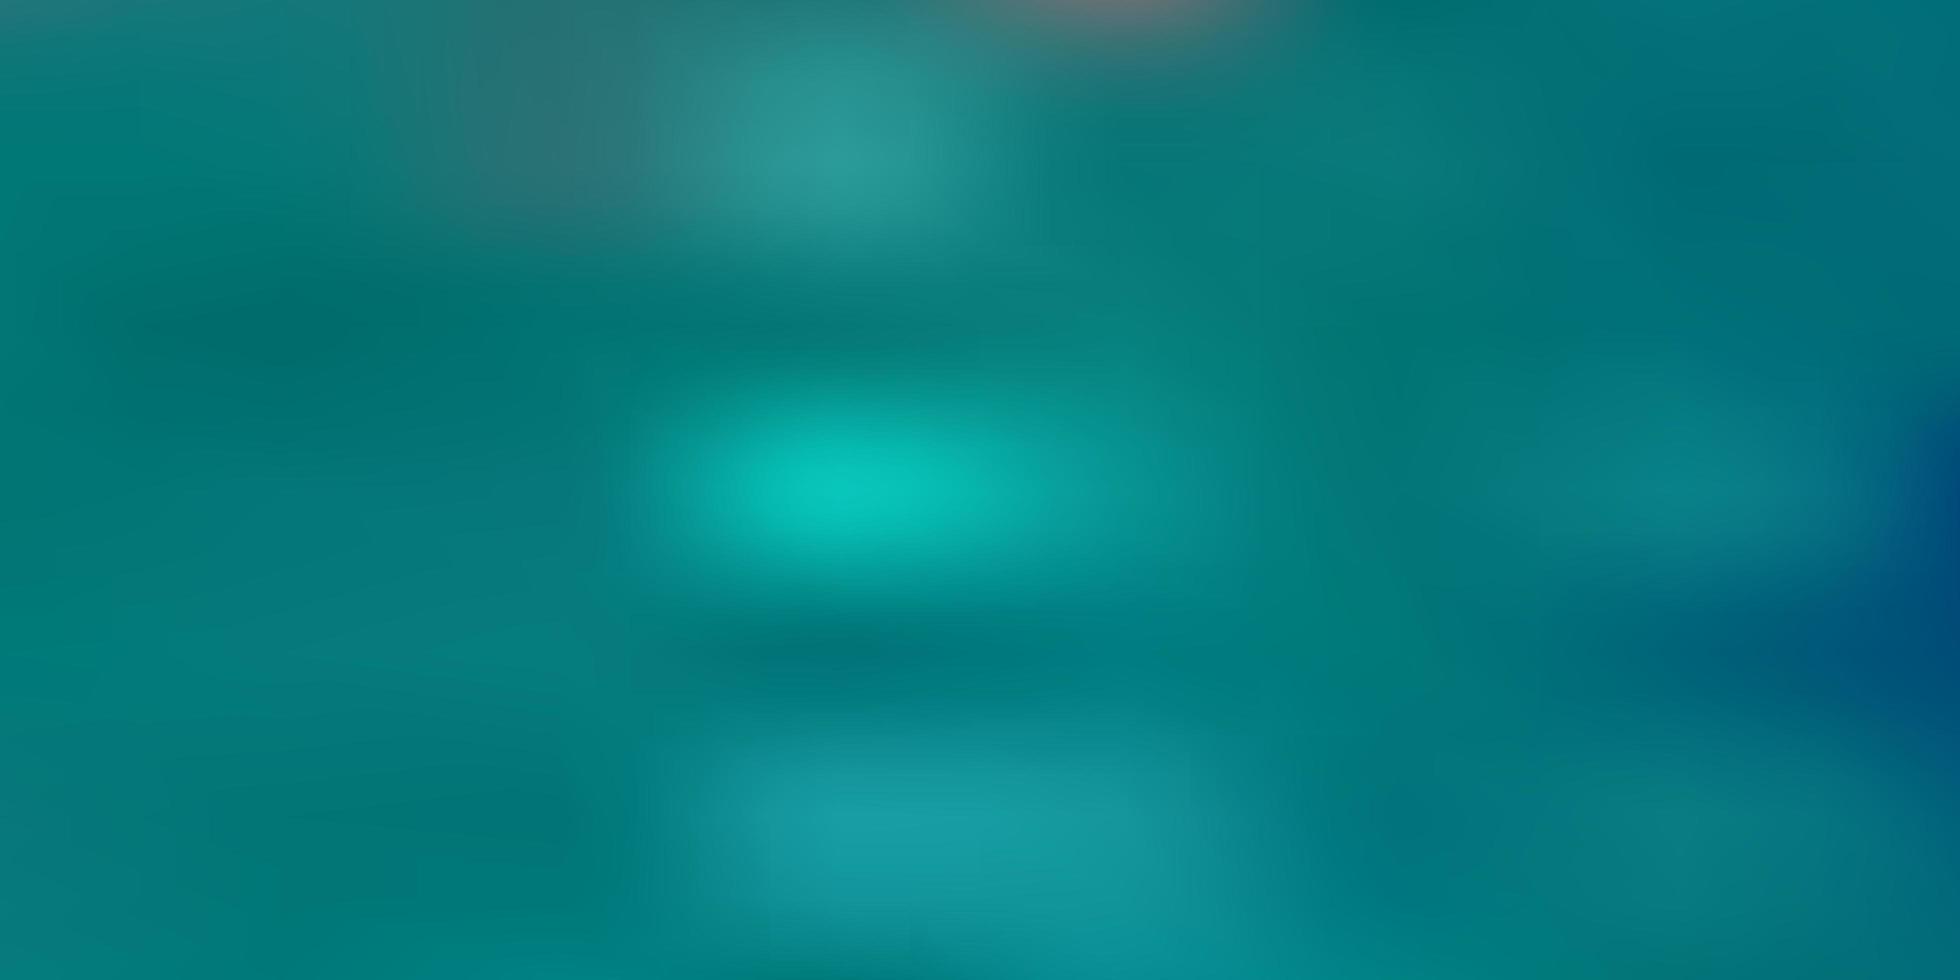 Light blue, green vector blurred background.